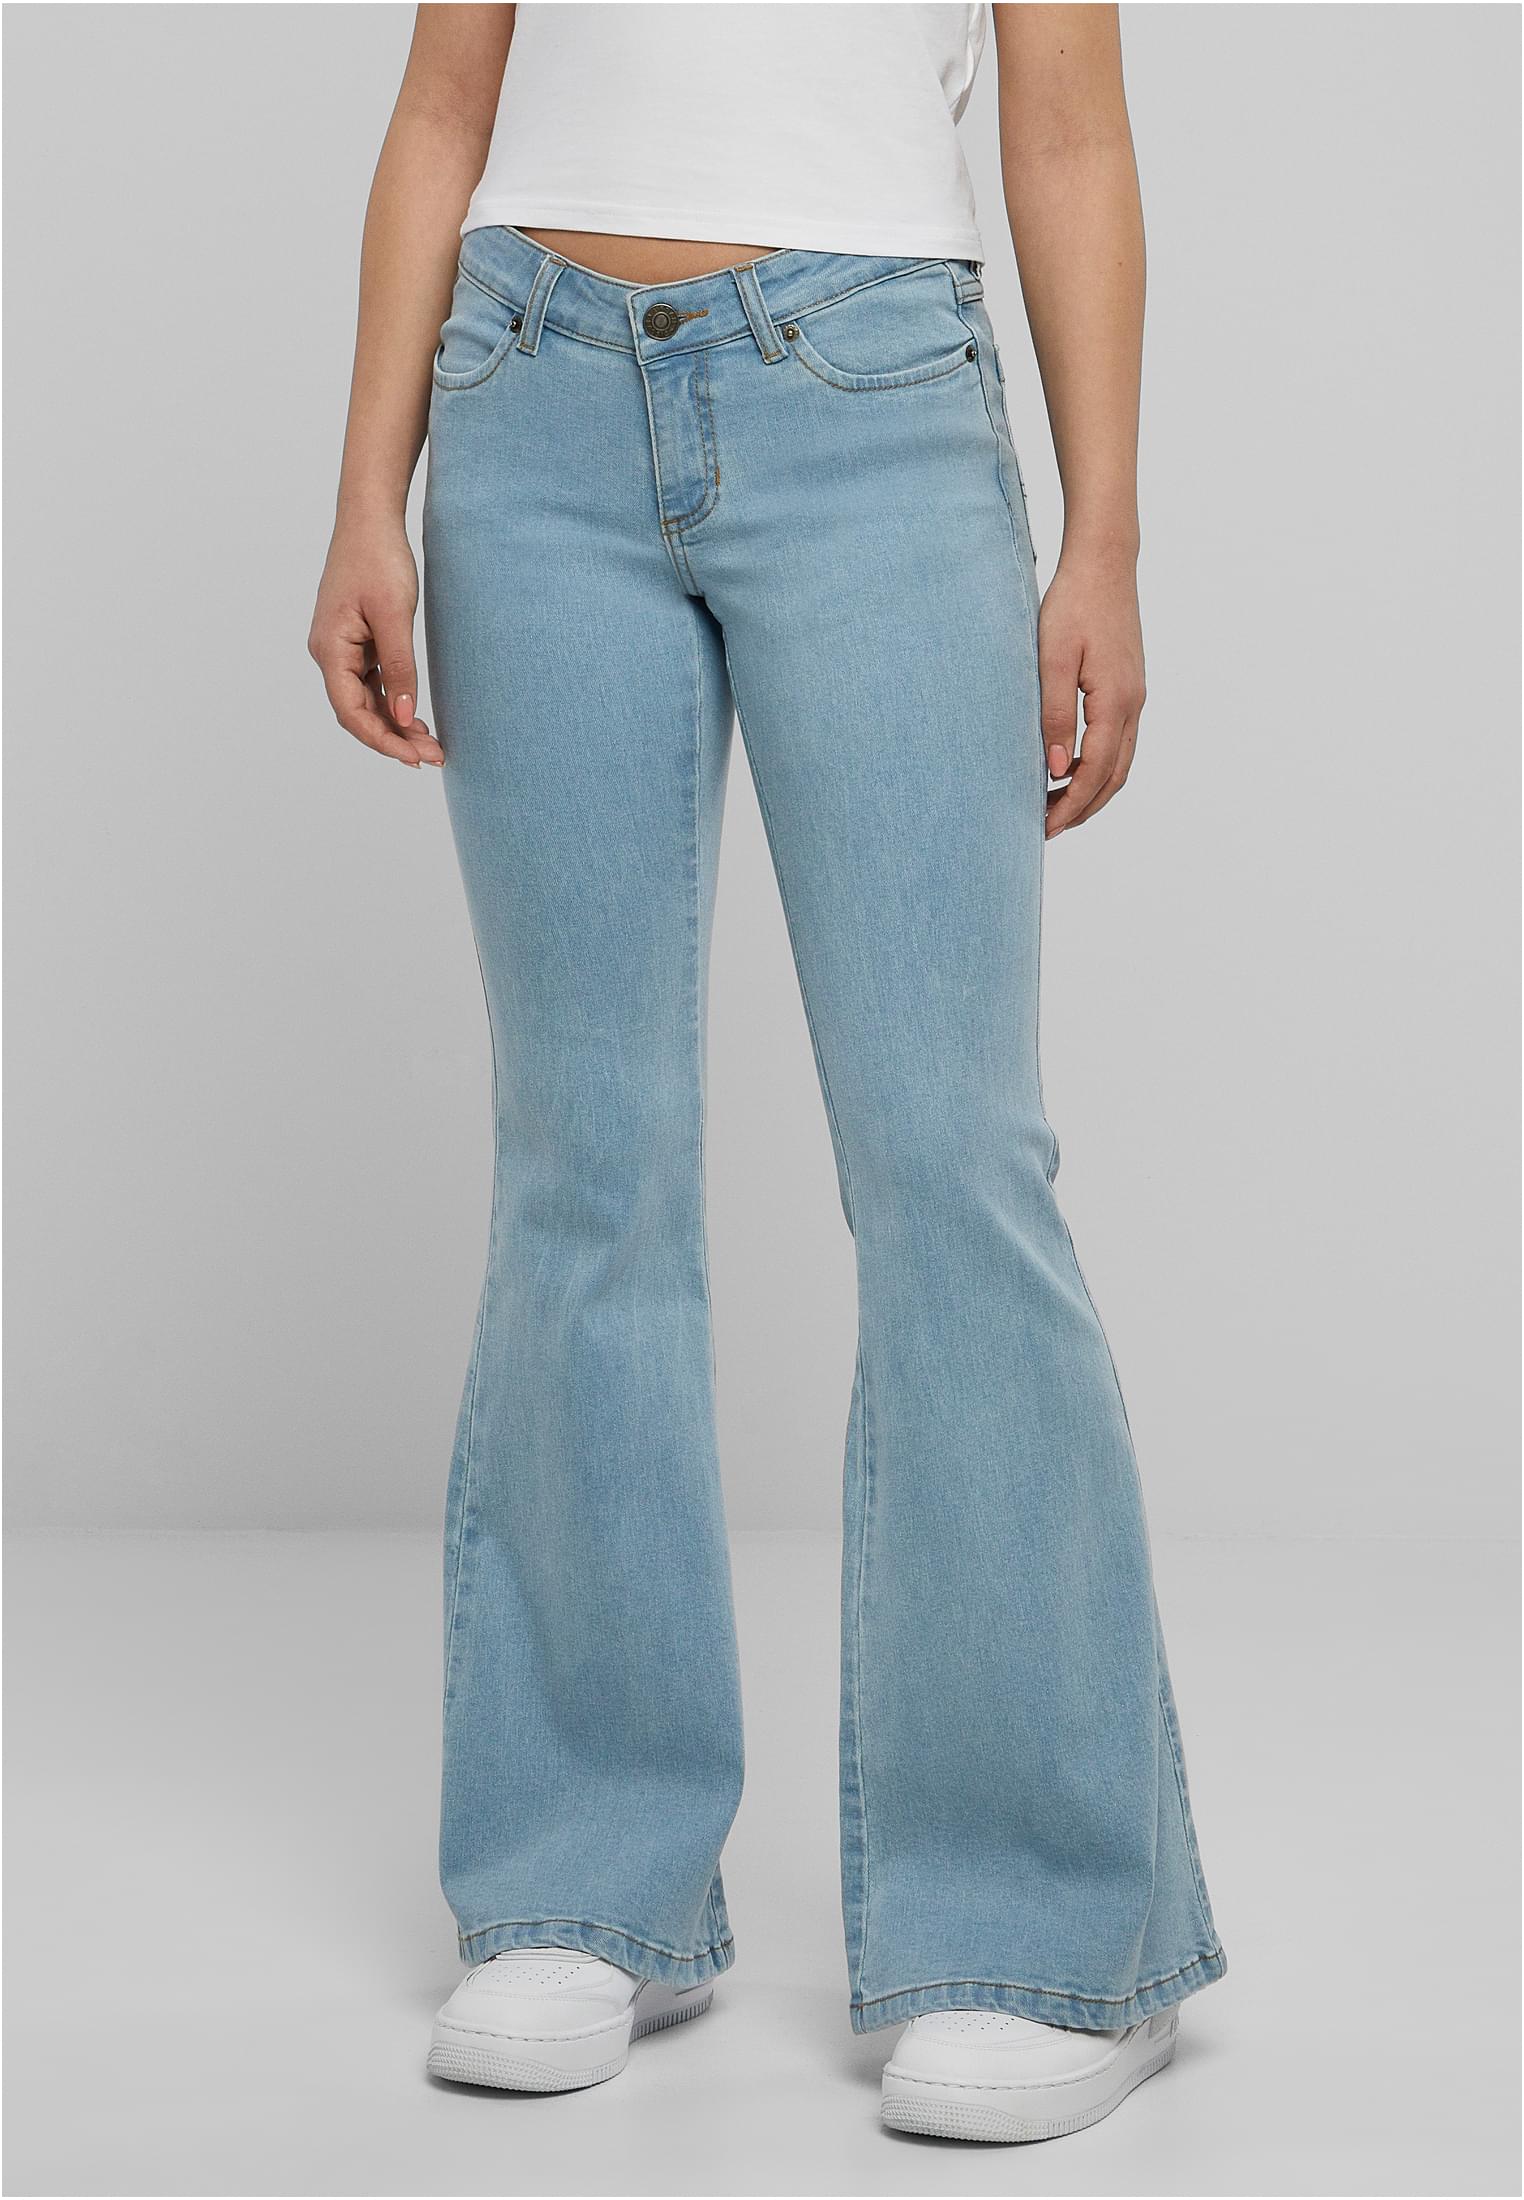 Women's bell bottoms jeans - blue